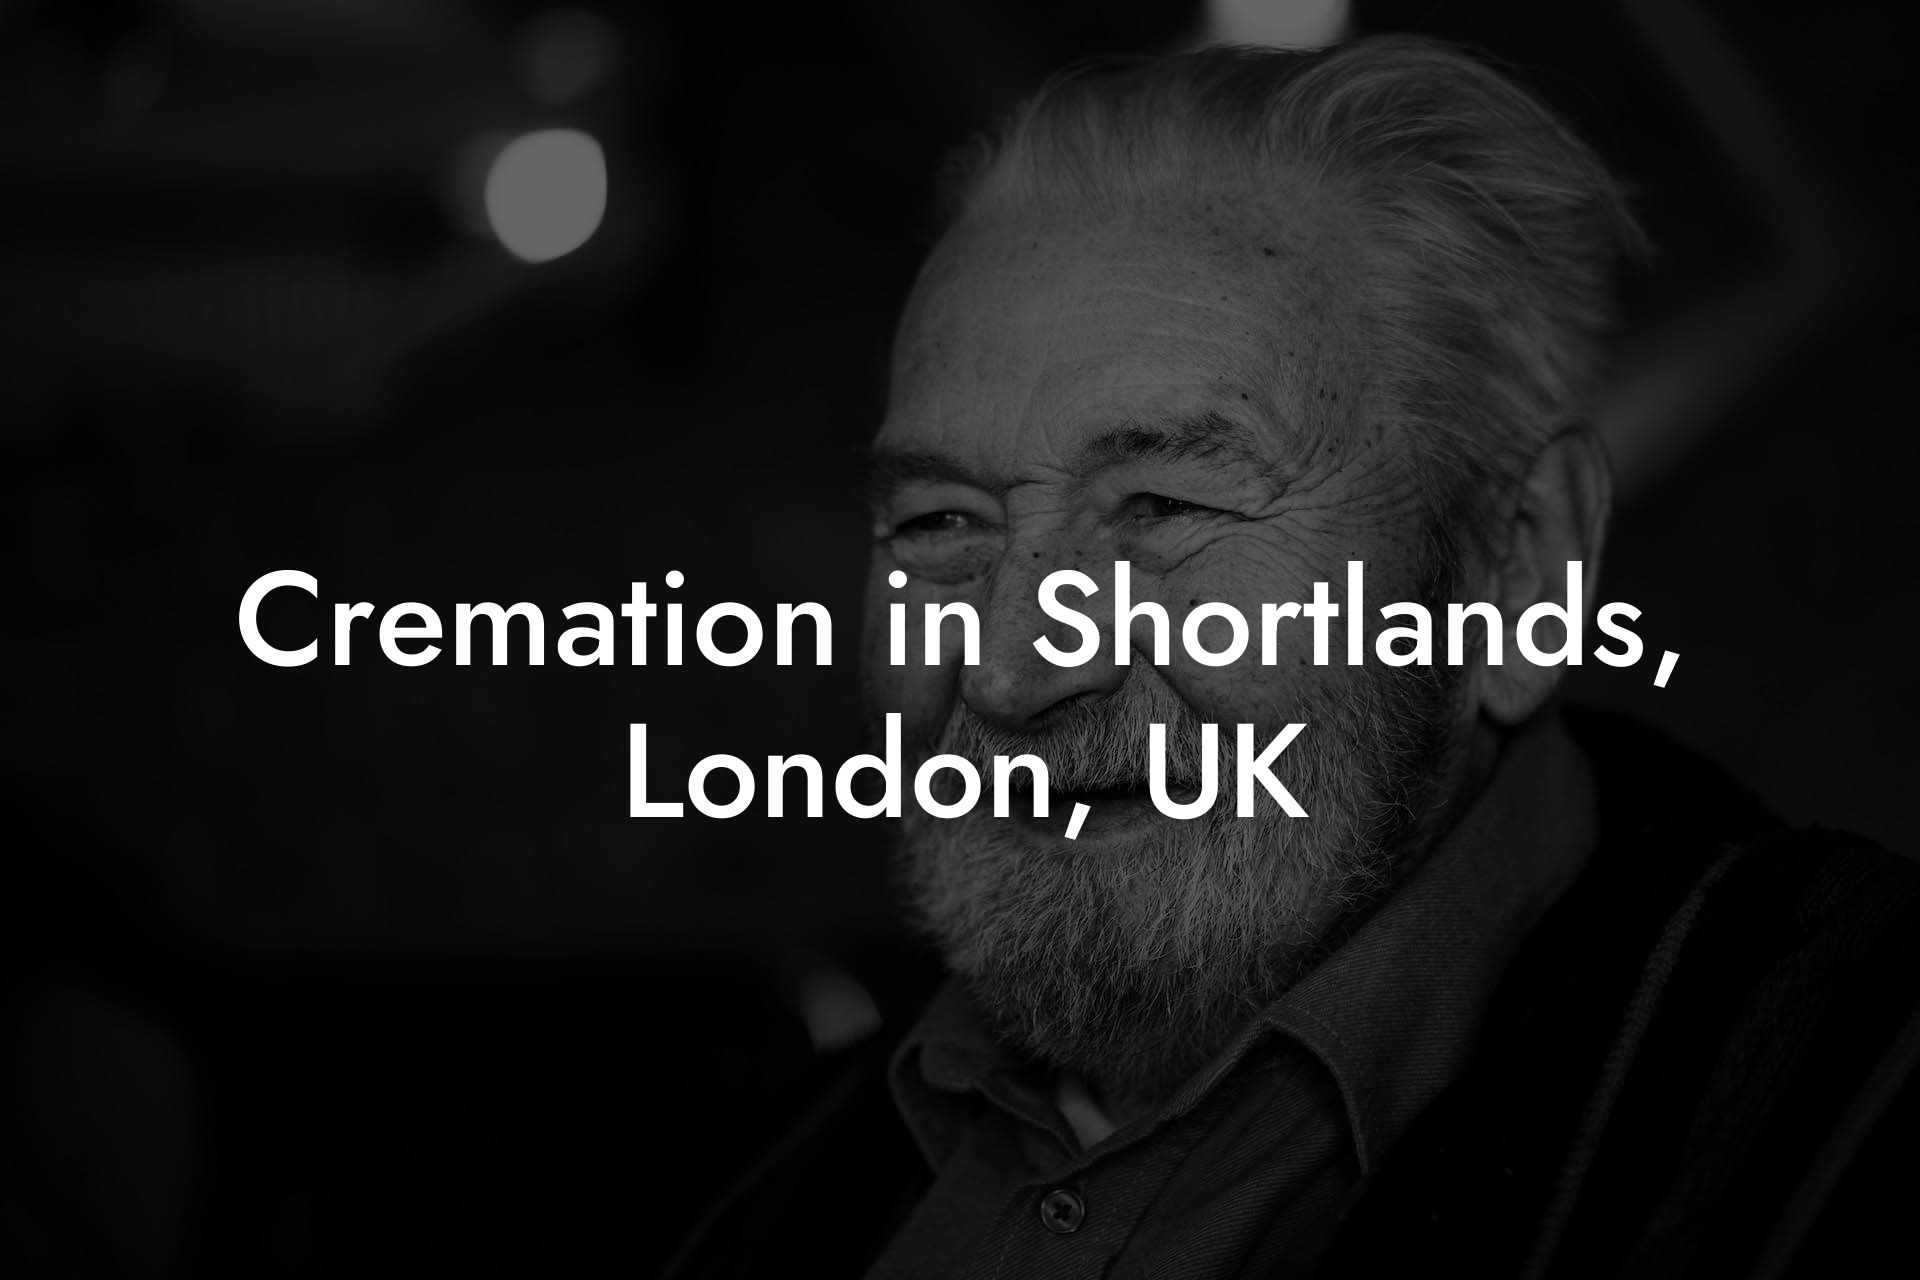 Cremation in Shortlands, London, UK